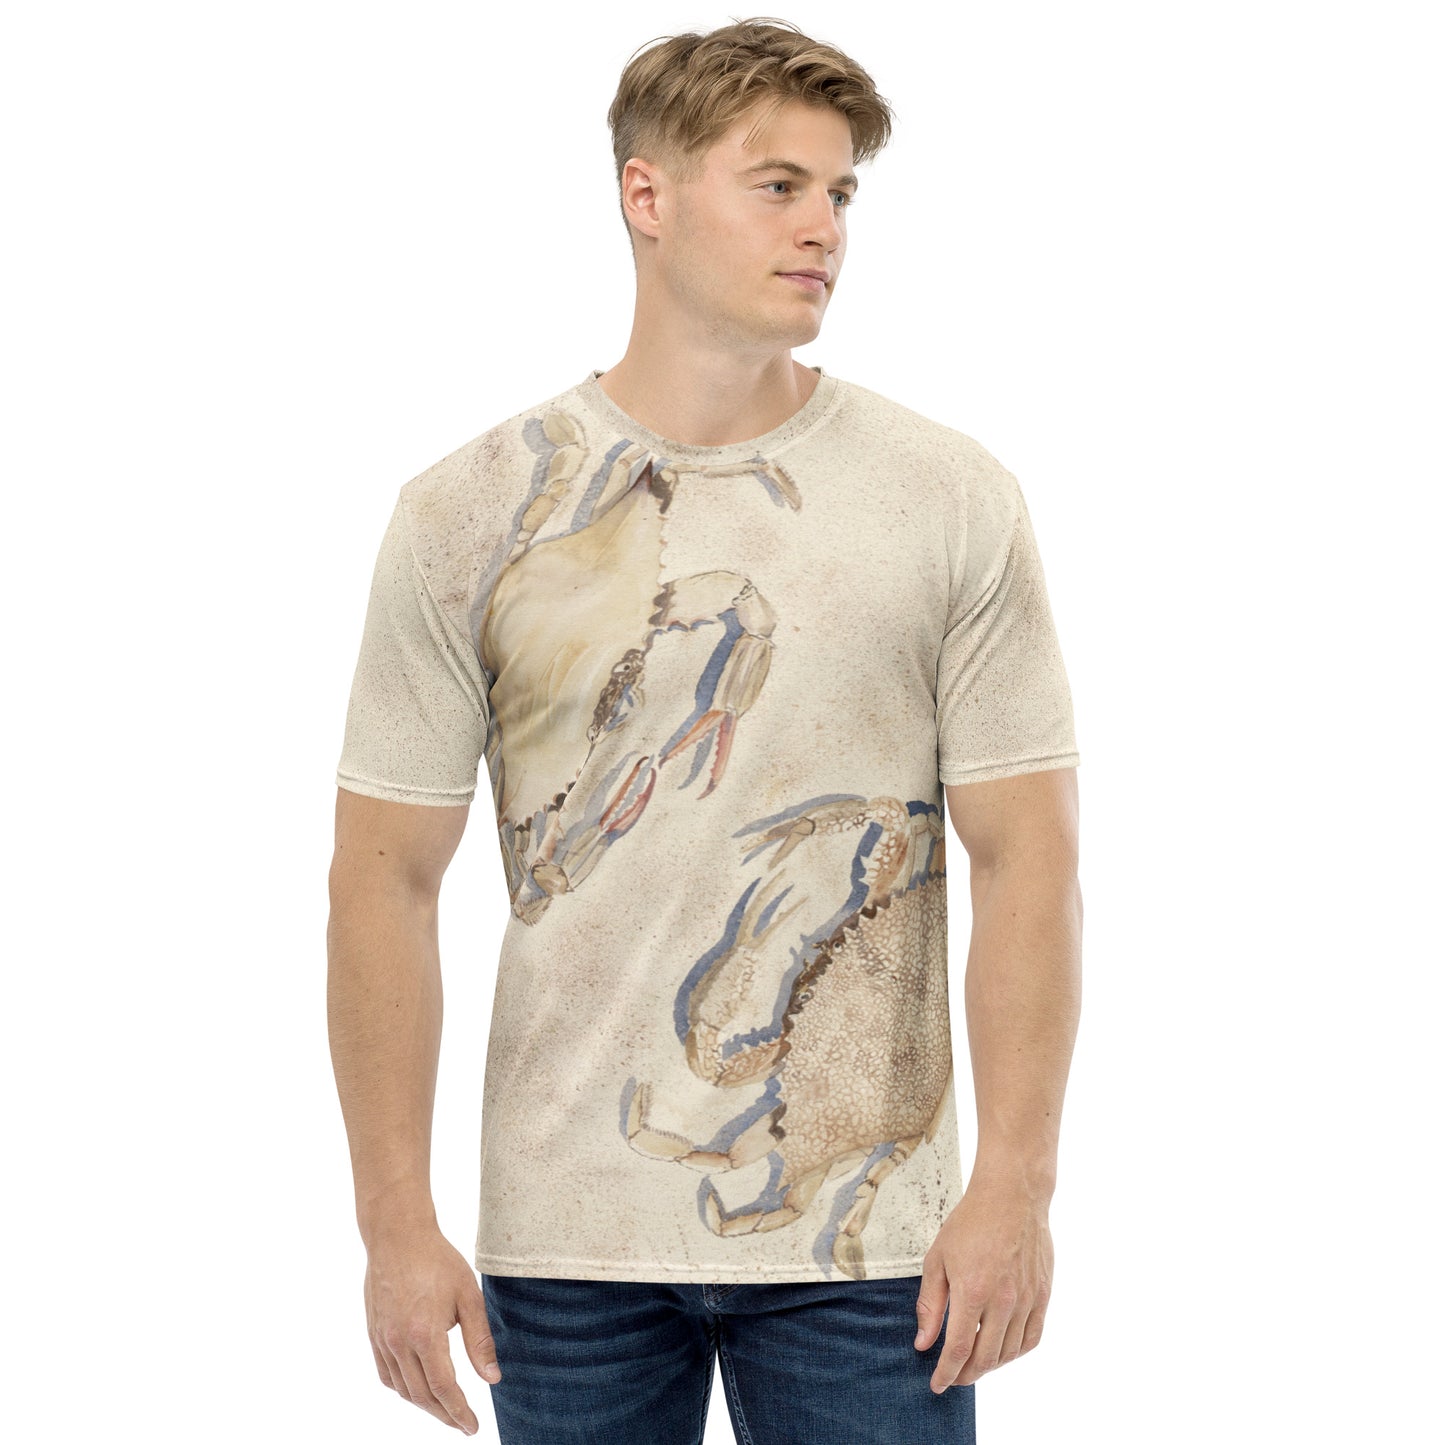 Sanibel Crabs Watercolor Men's Shirt